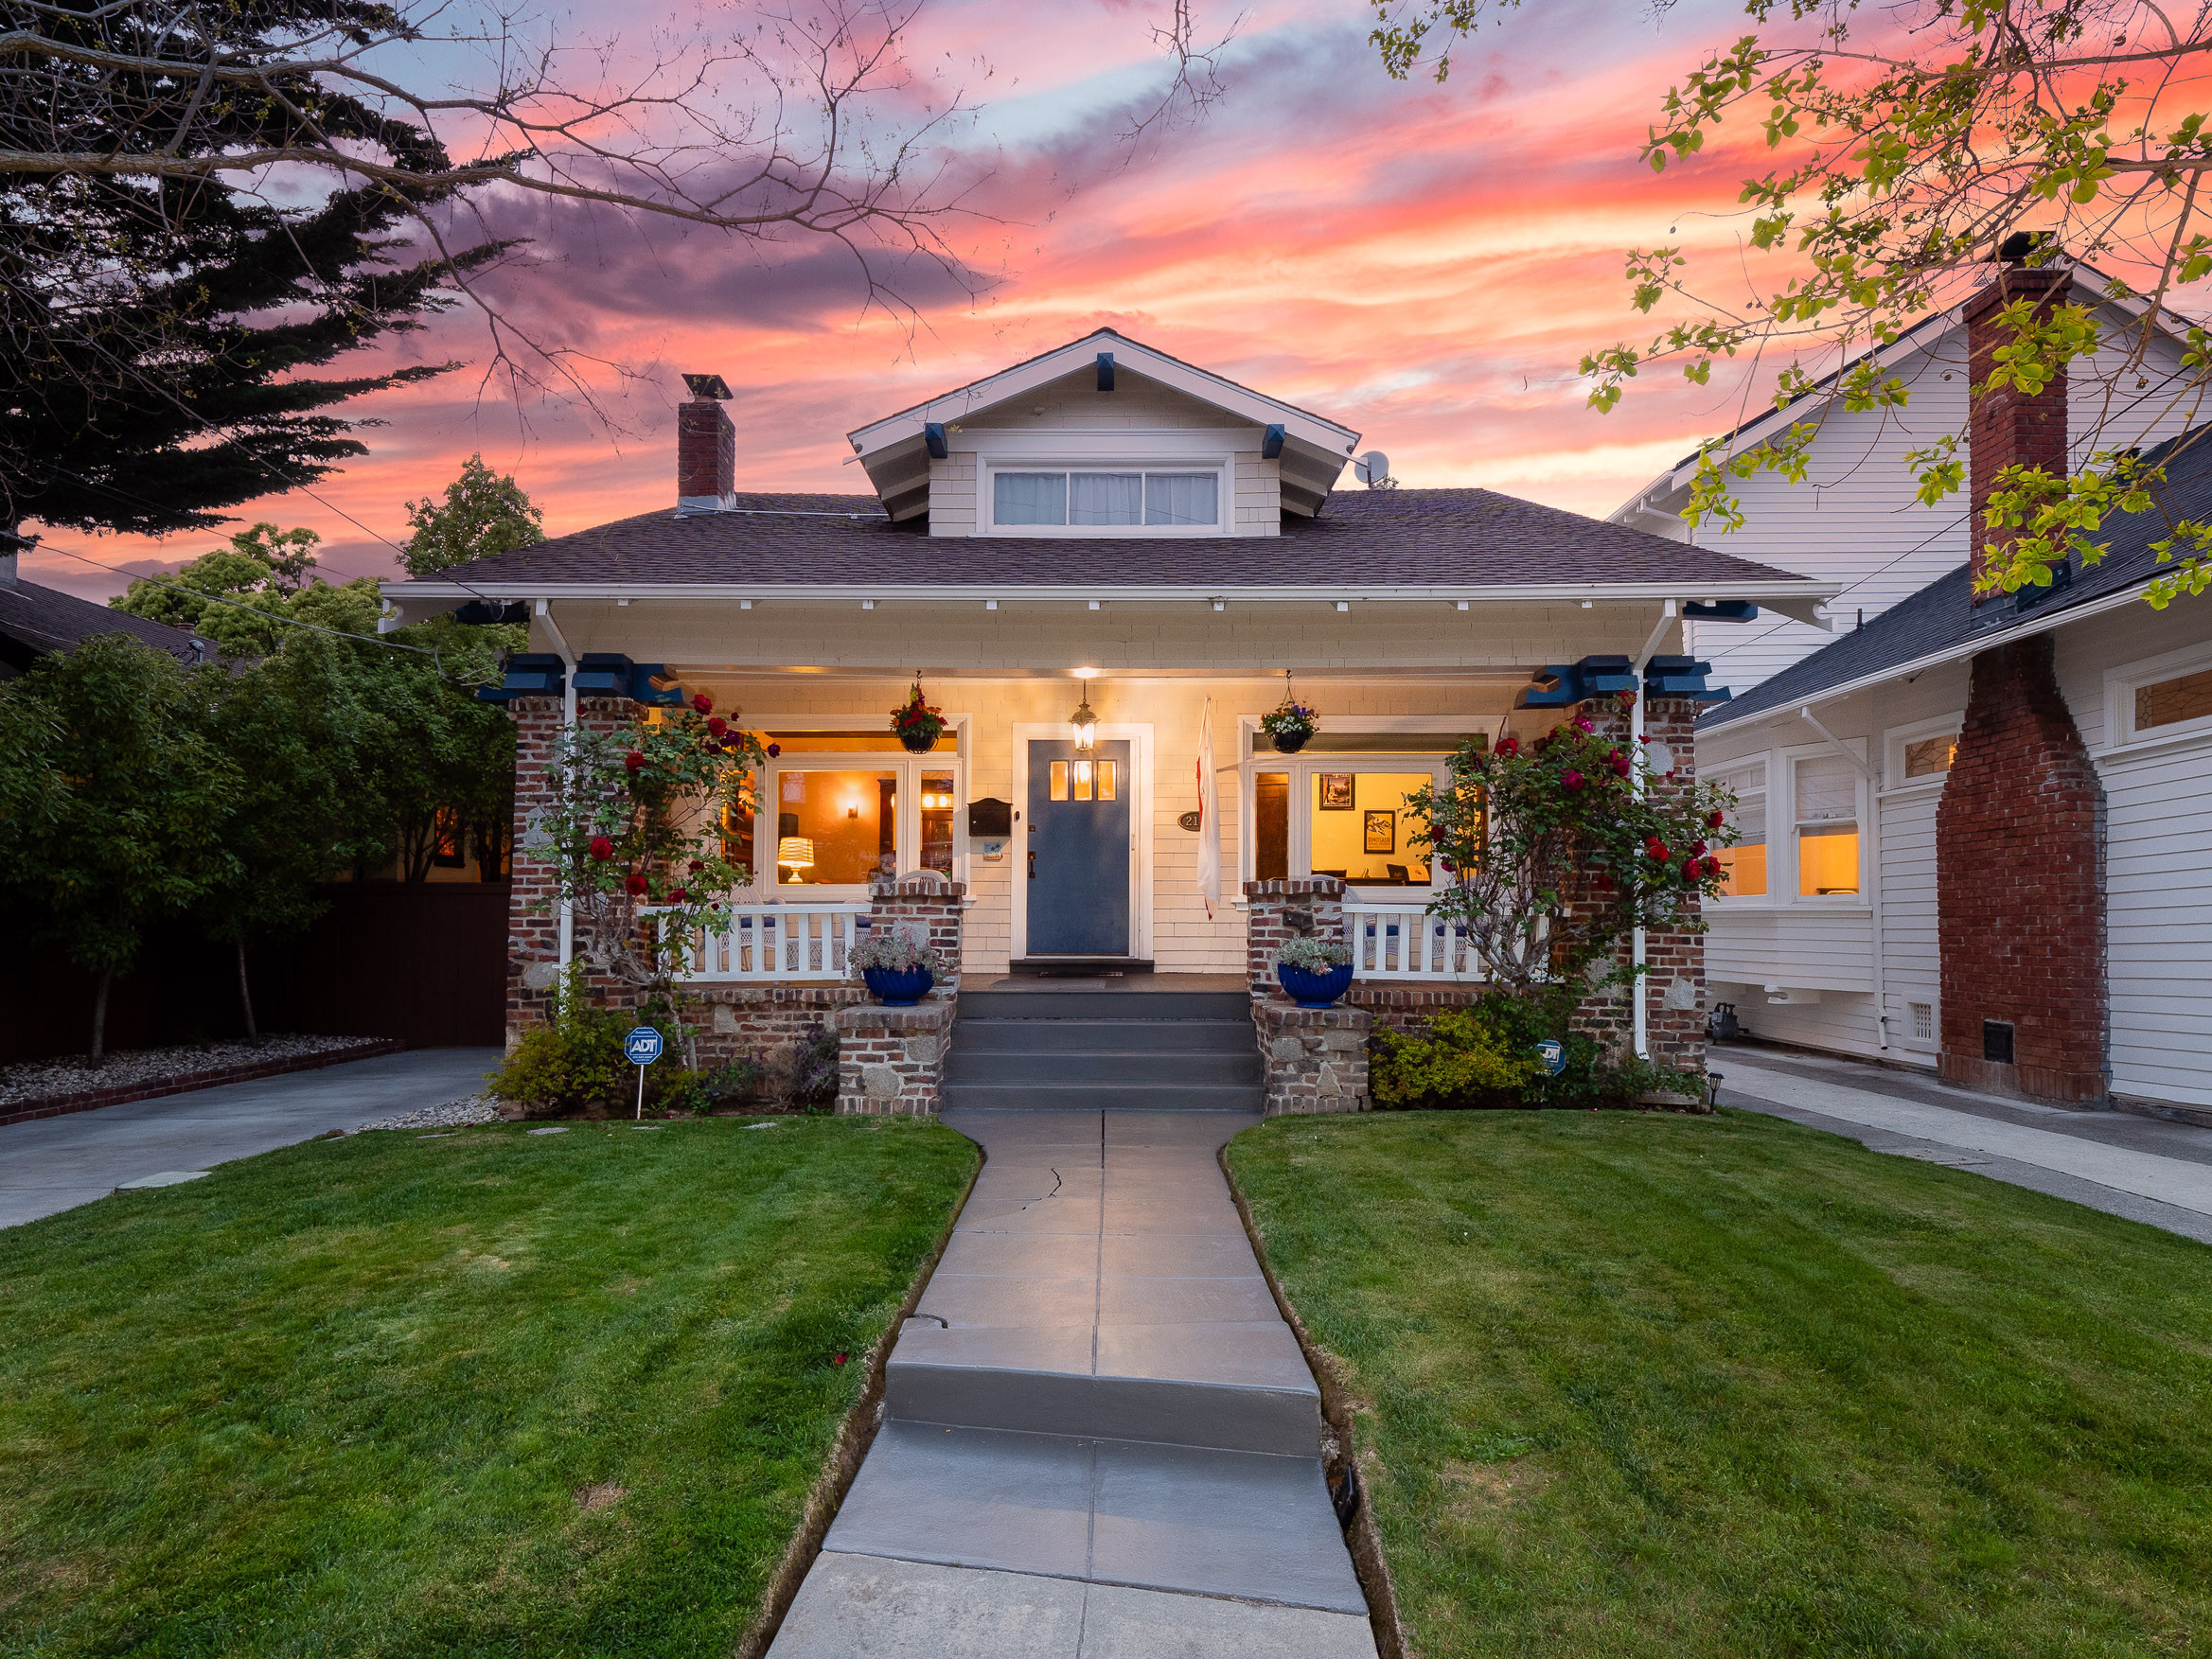 215 State Street Craftsman Home Twilight in Easton Addition Neighborhood in San Mateo.